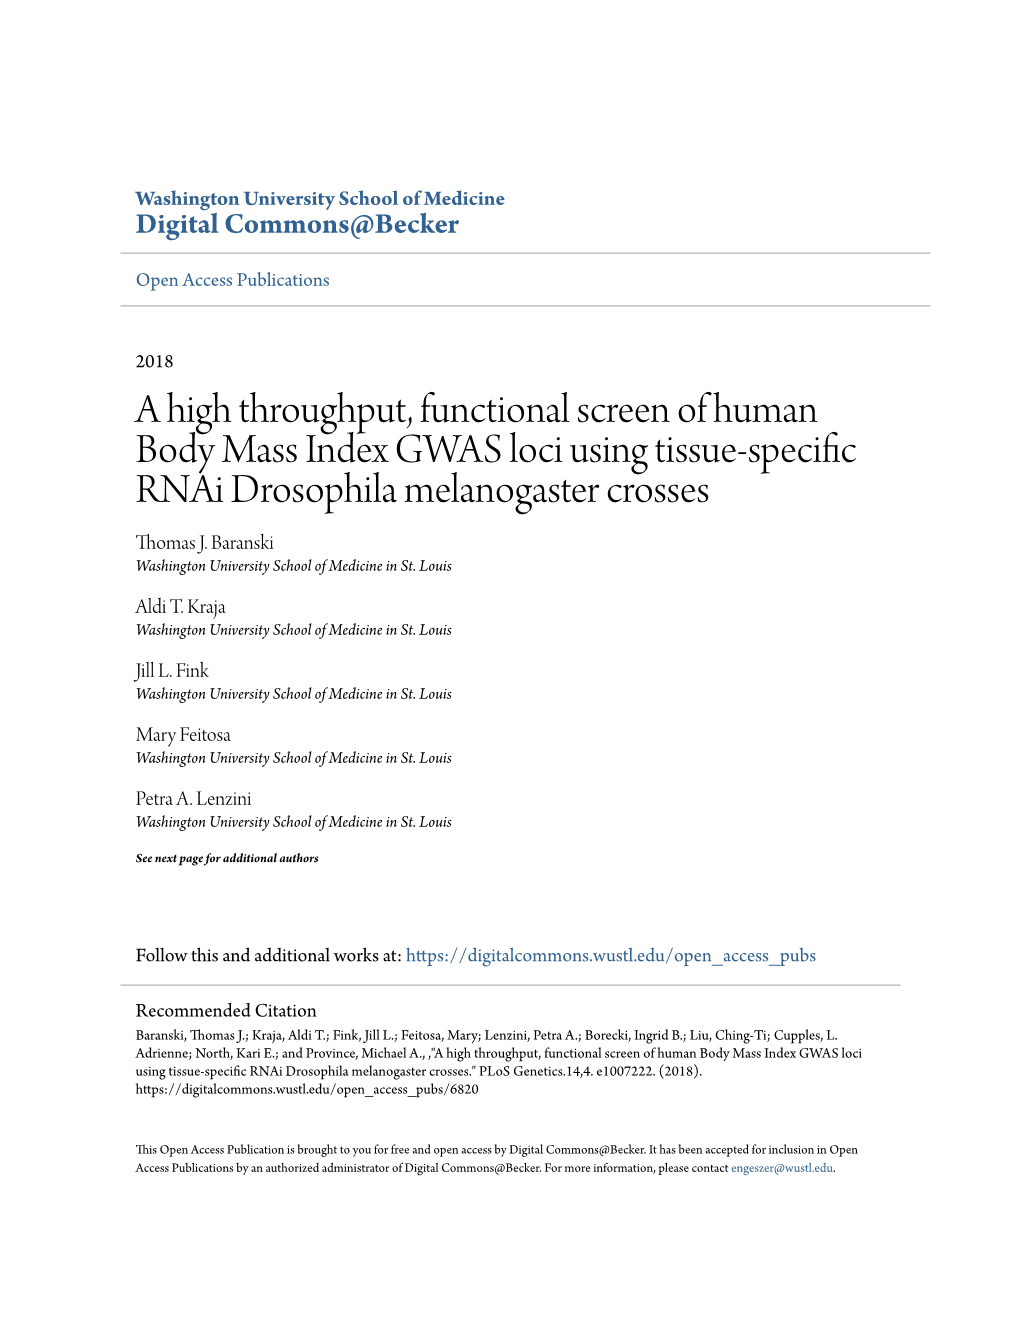 A High Throughput, Functional Screen of Human Body Mass Index GWAS Loci Using Tissue-Specific Rnai Drosophila Melanogaster Crosses Thomas J